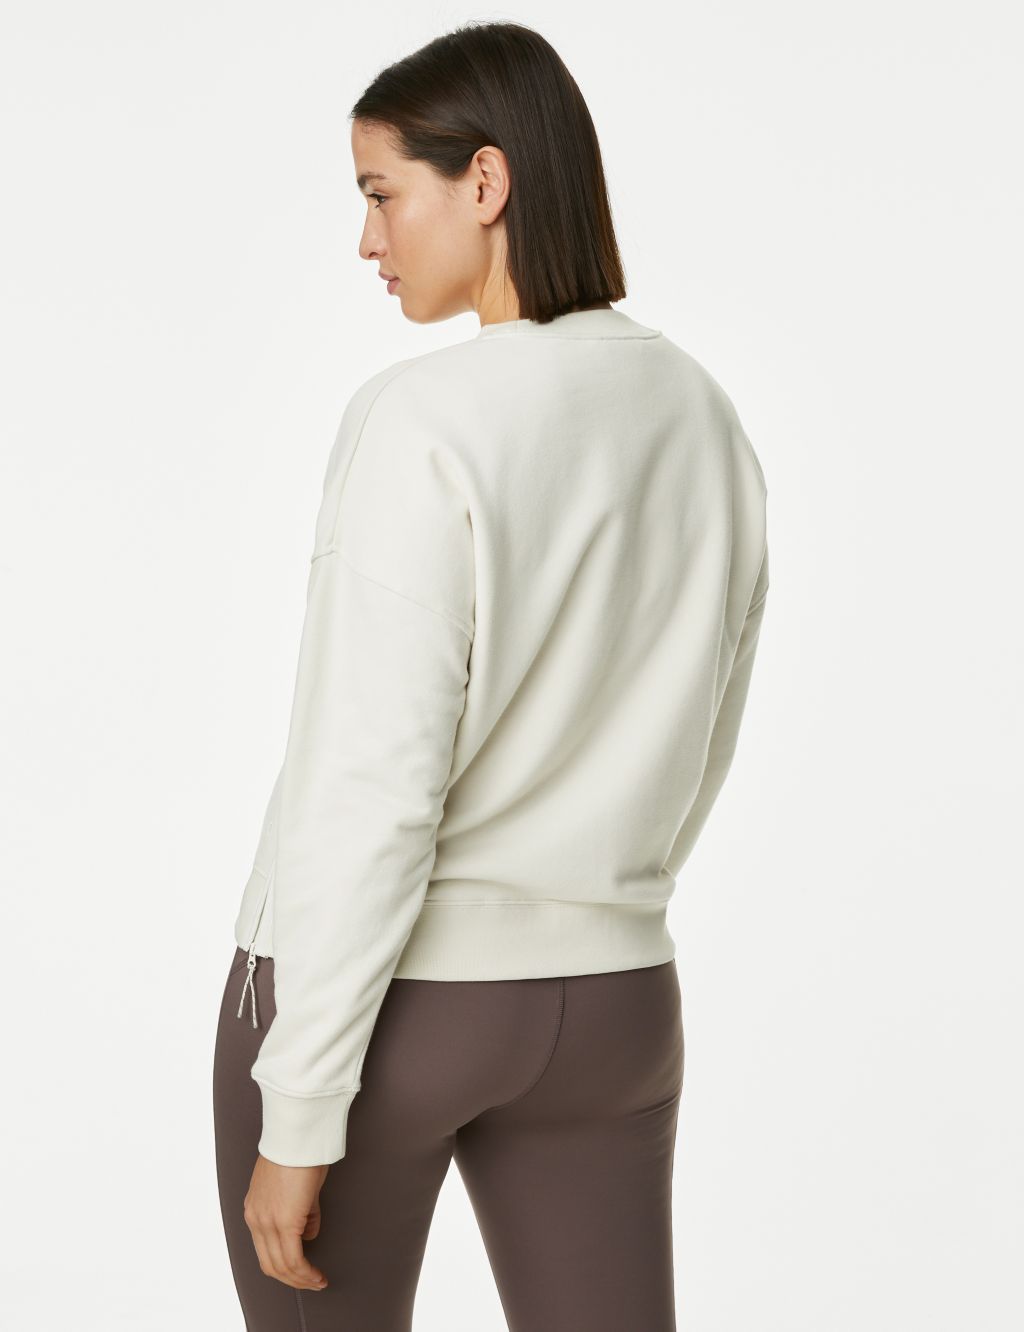 Cotton Rich Mesh Panel Sweatshirt image 4